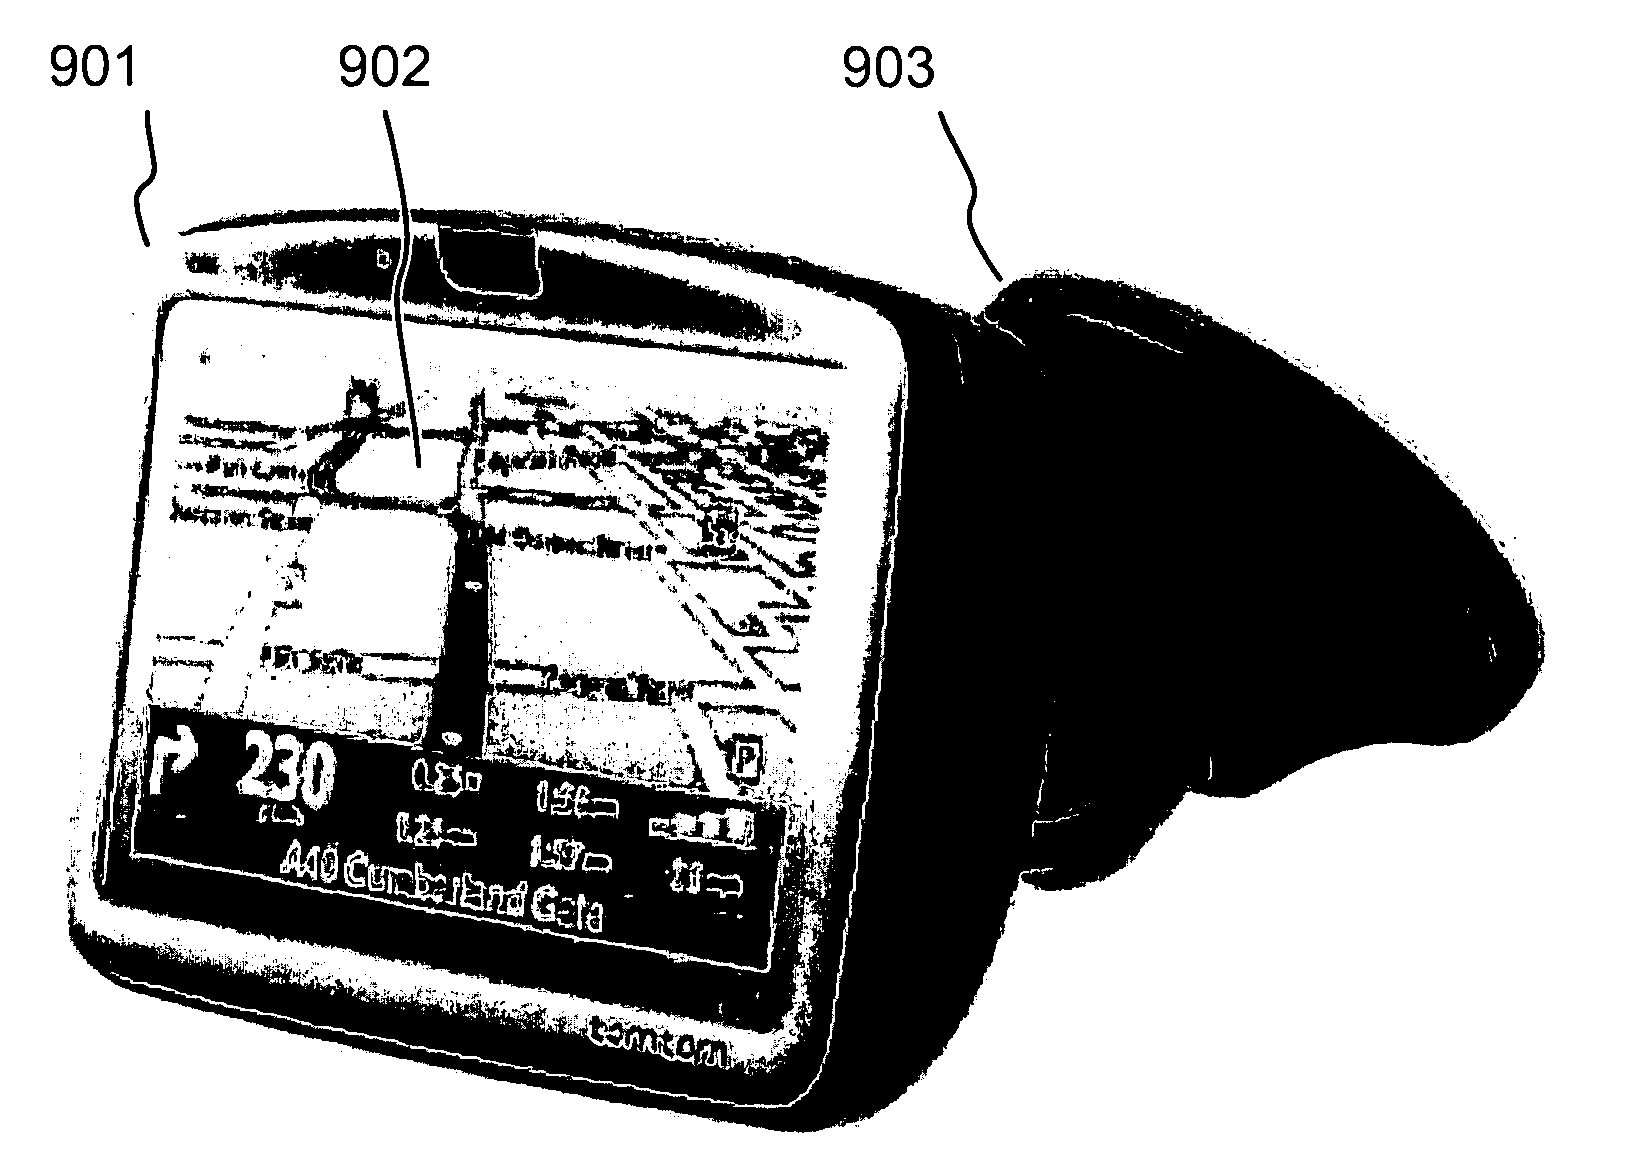 Portable navigation device